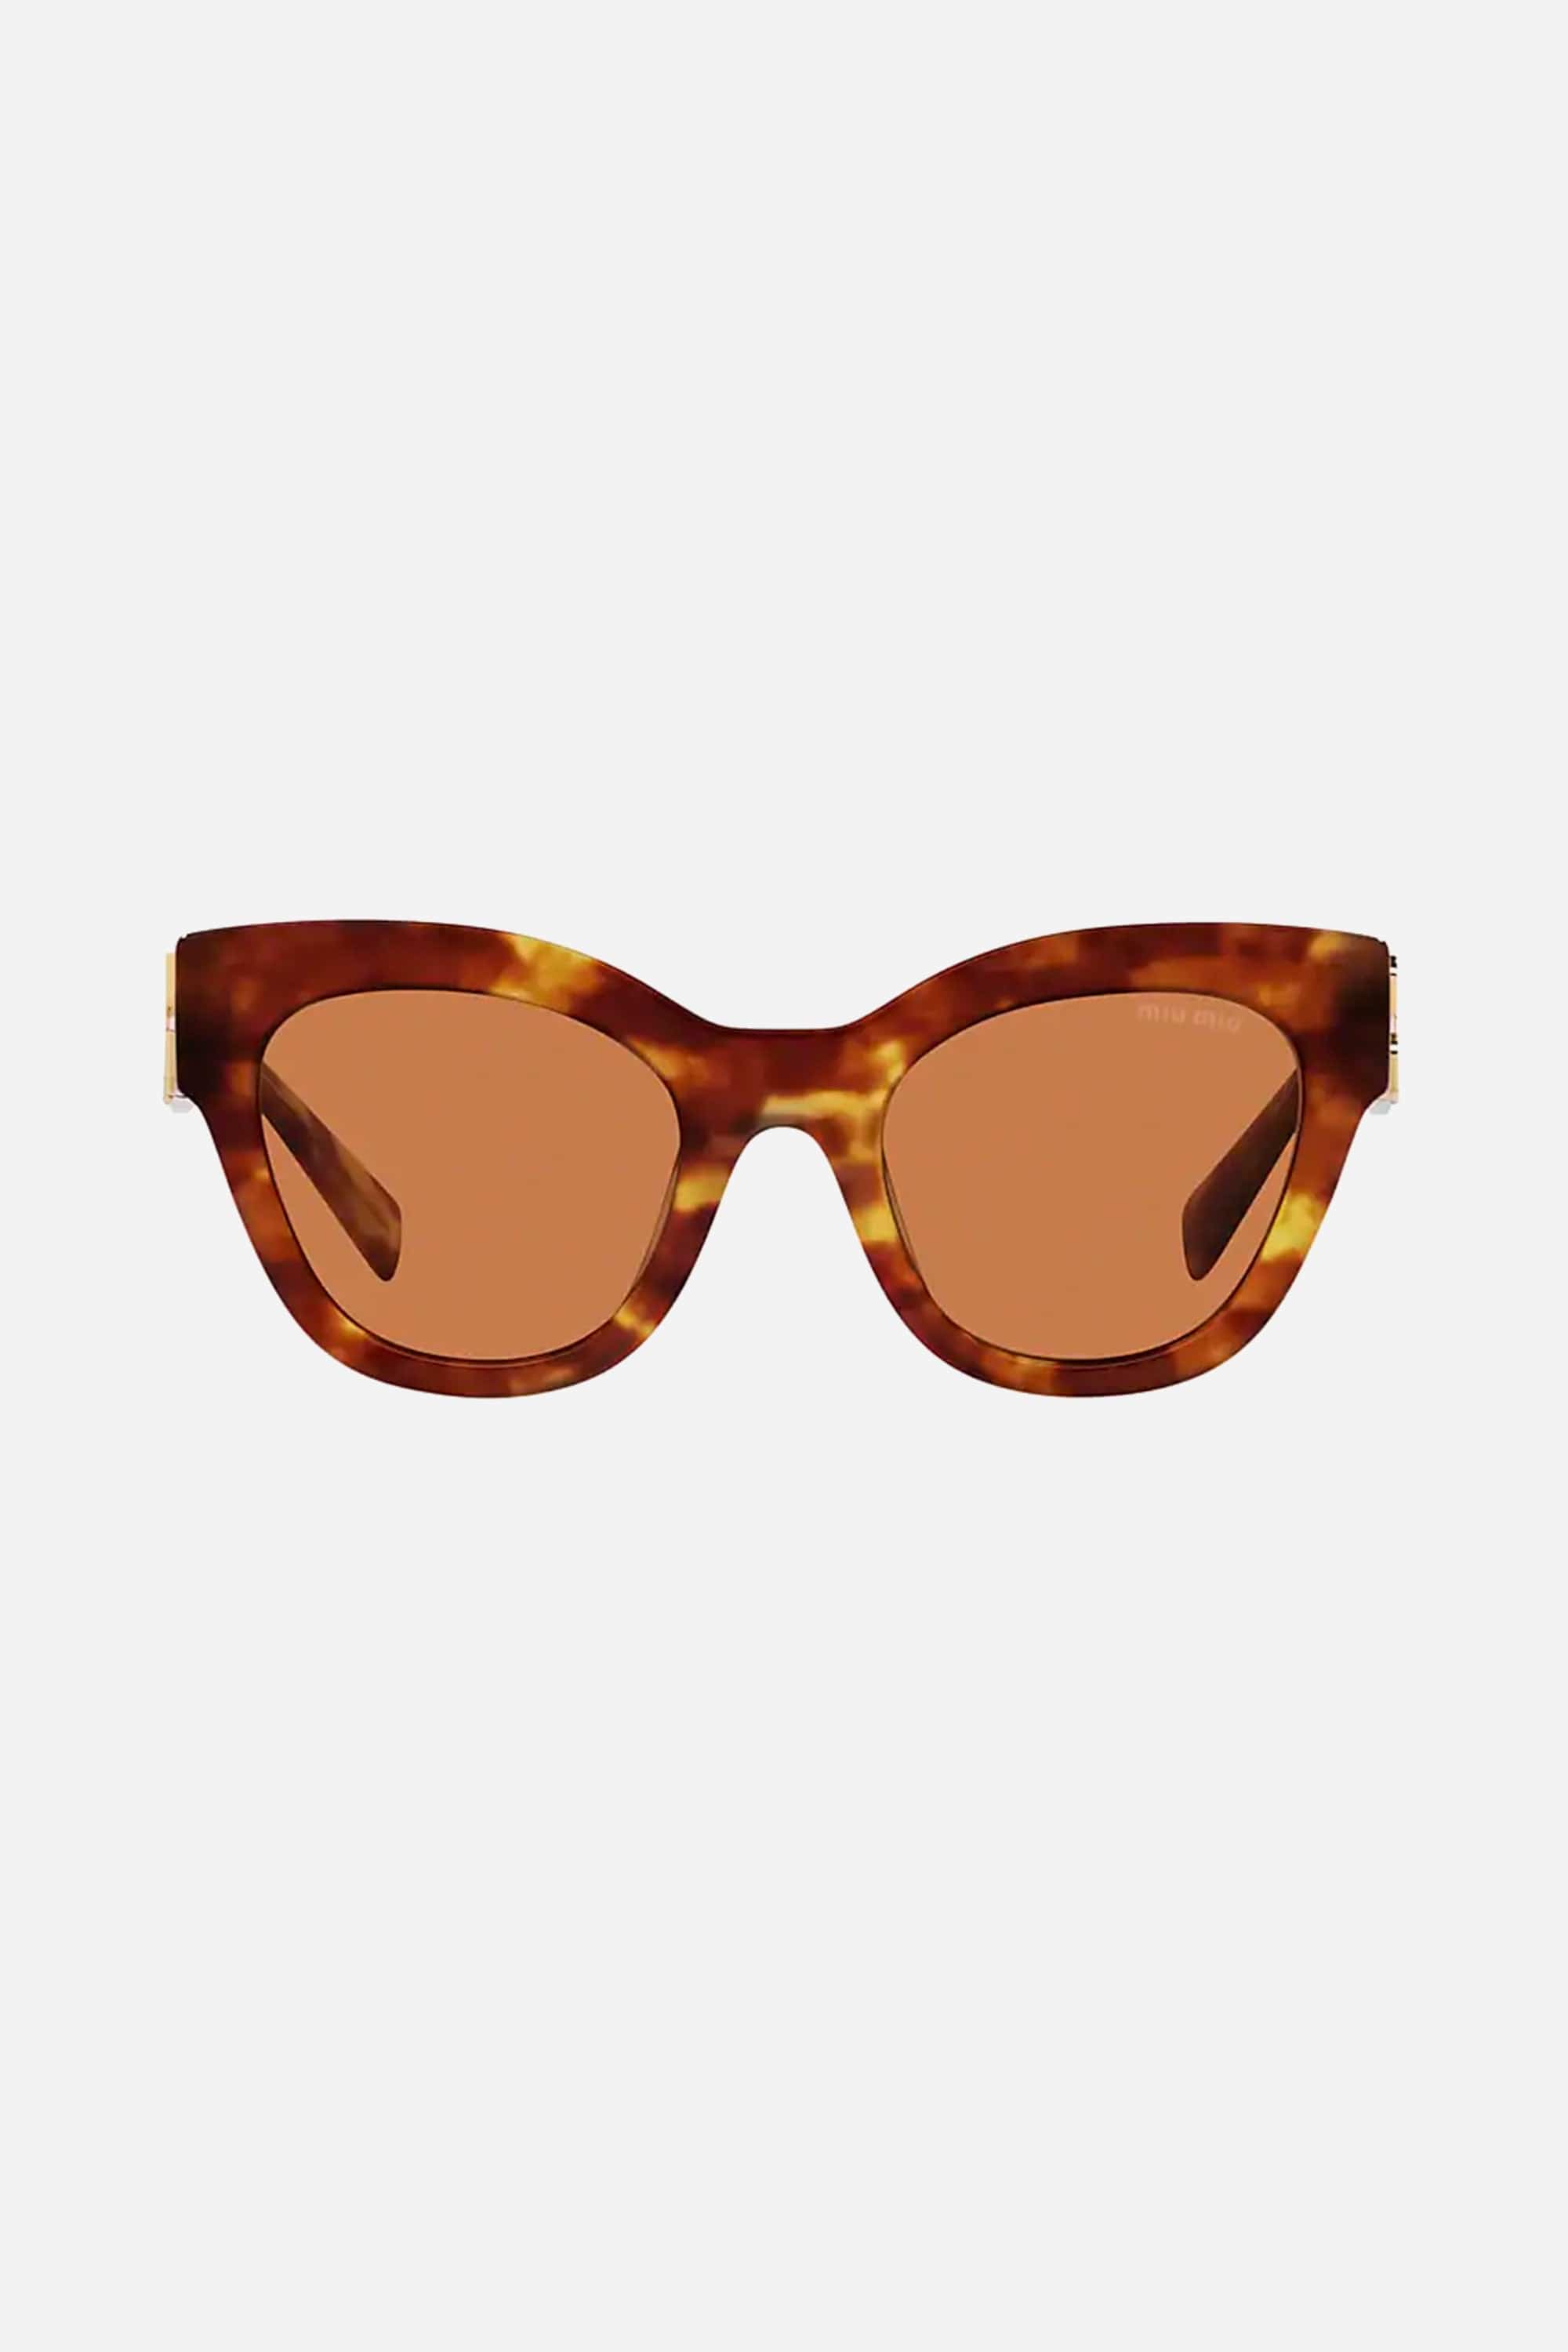 Miu Miu cat-eye havana sunglasses - Eyewear Club